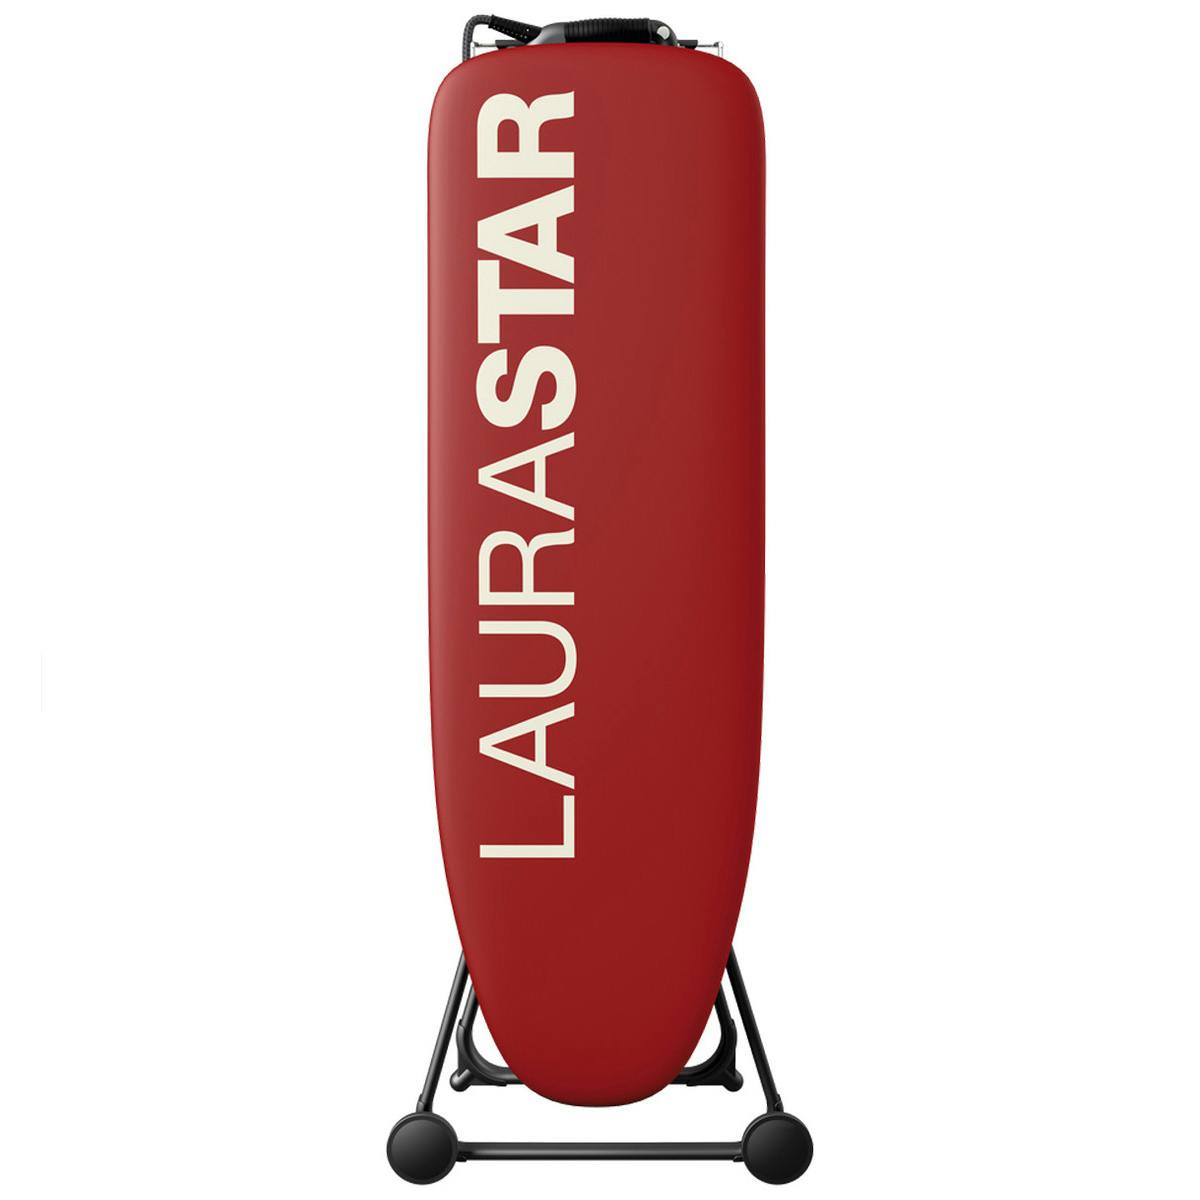 Laurastar Smart Go Plus Ironing System